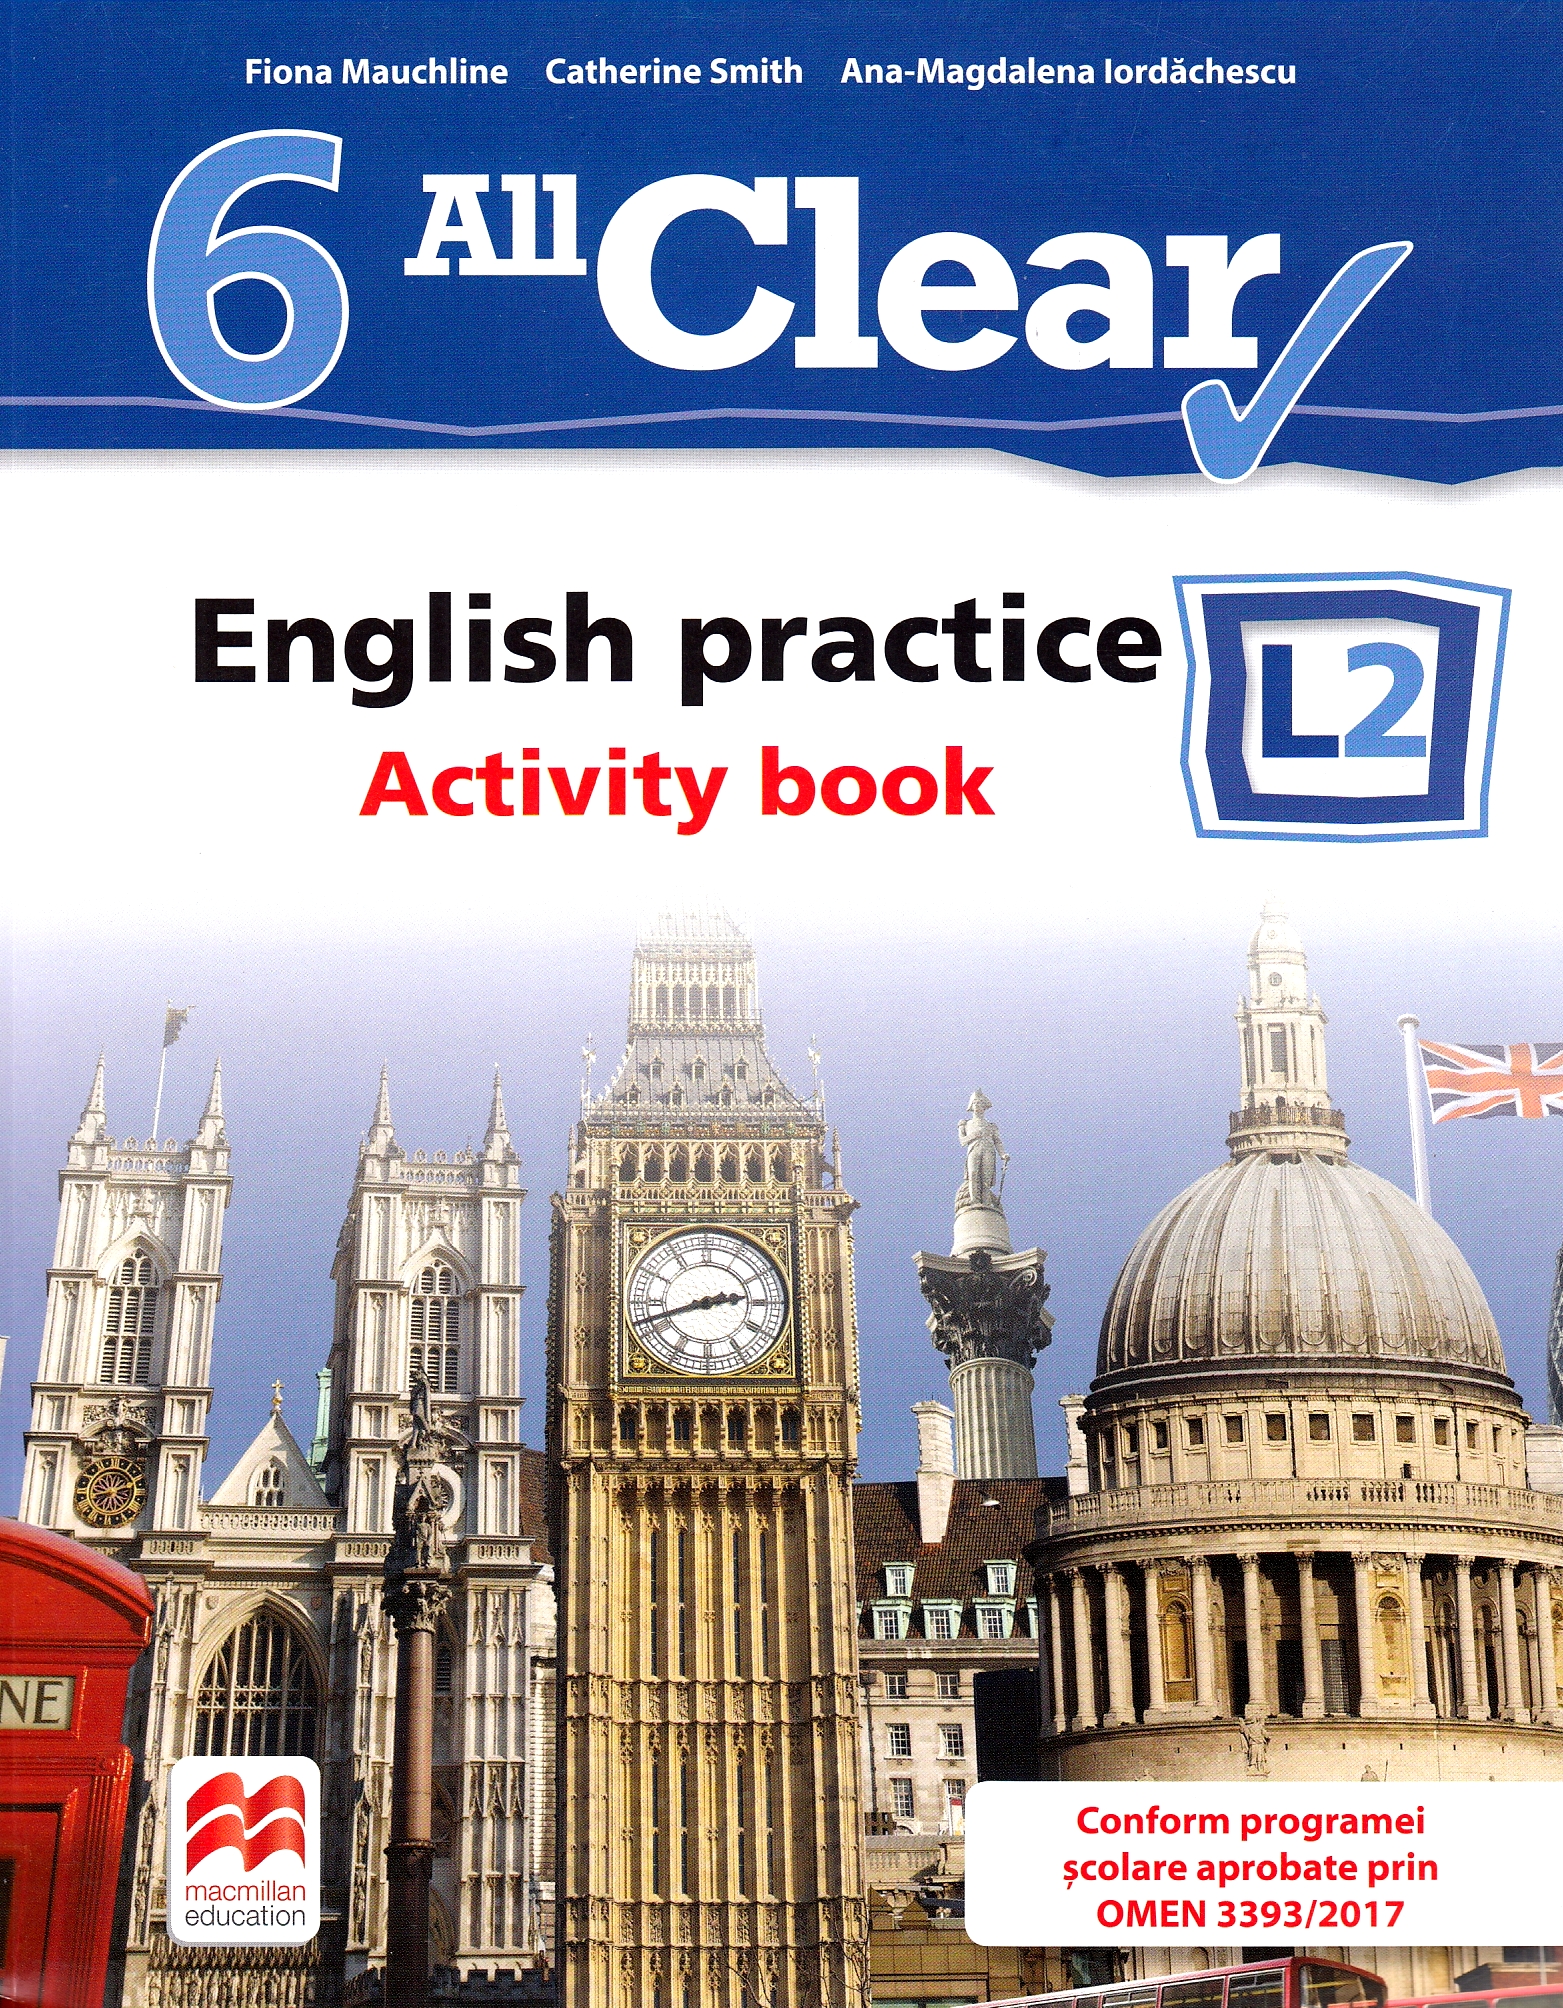 All Clear. English Practice L2. Activity book. Lectia de engleza - Clasa 6 - Fiona Mauchline